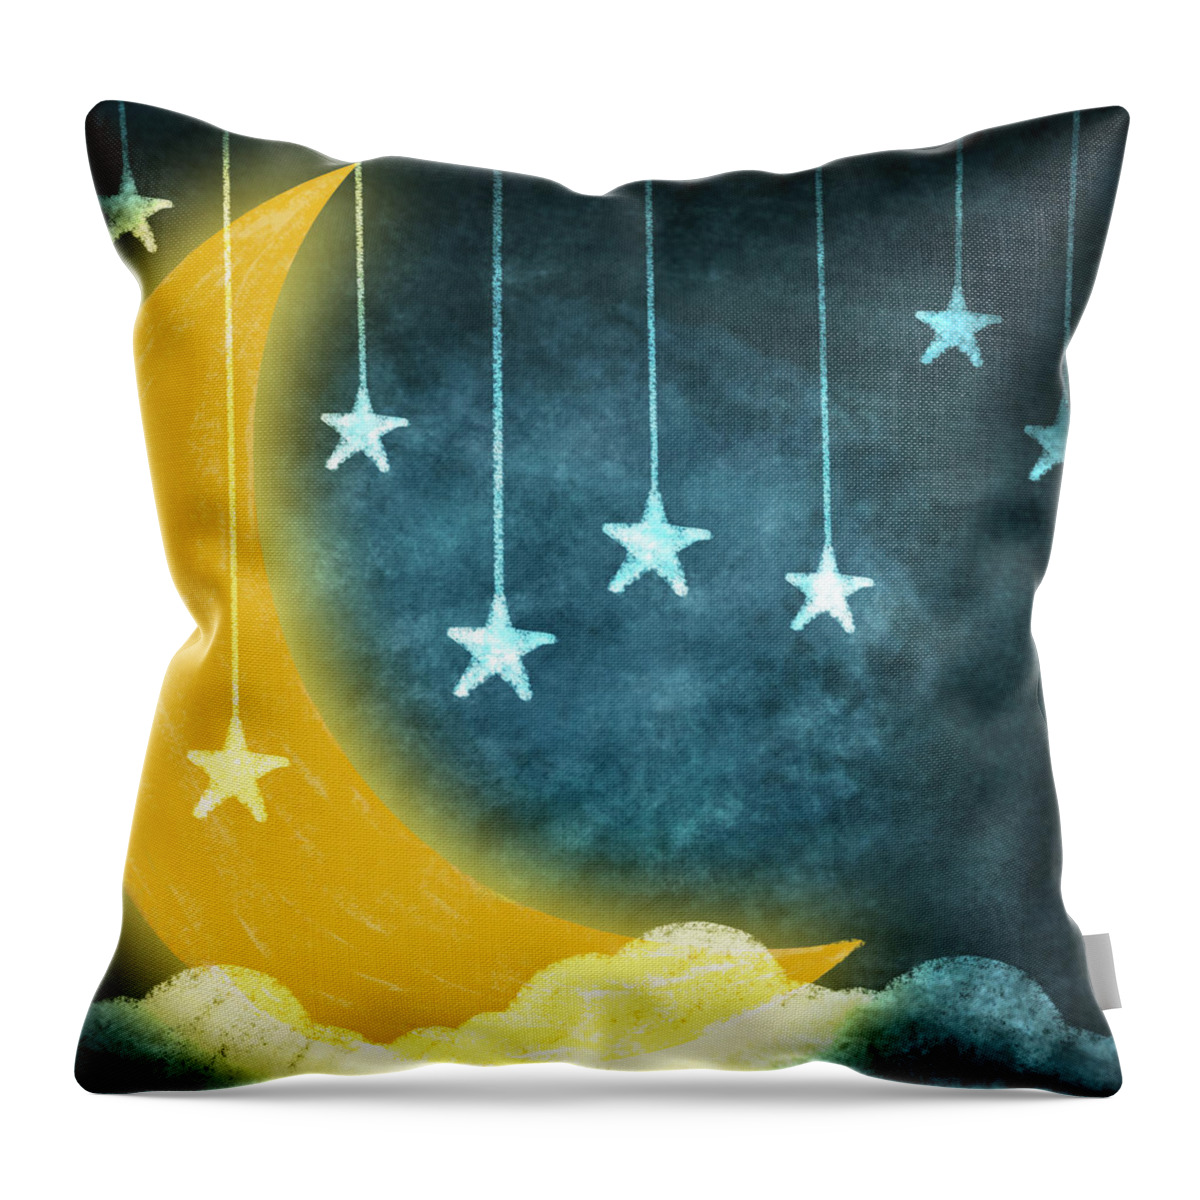 Art Throw Pillow featuring the painting Moon And Stars by Setsiri Silapasuwanchai